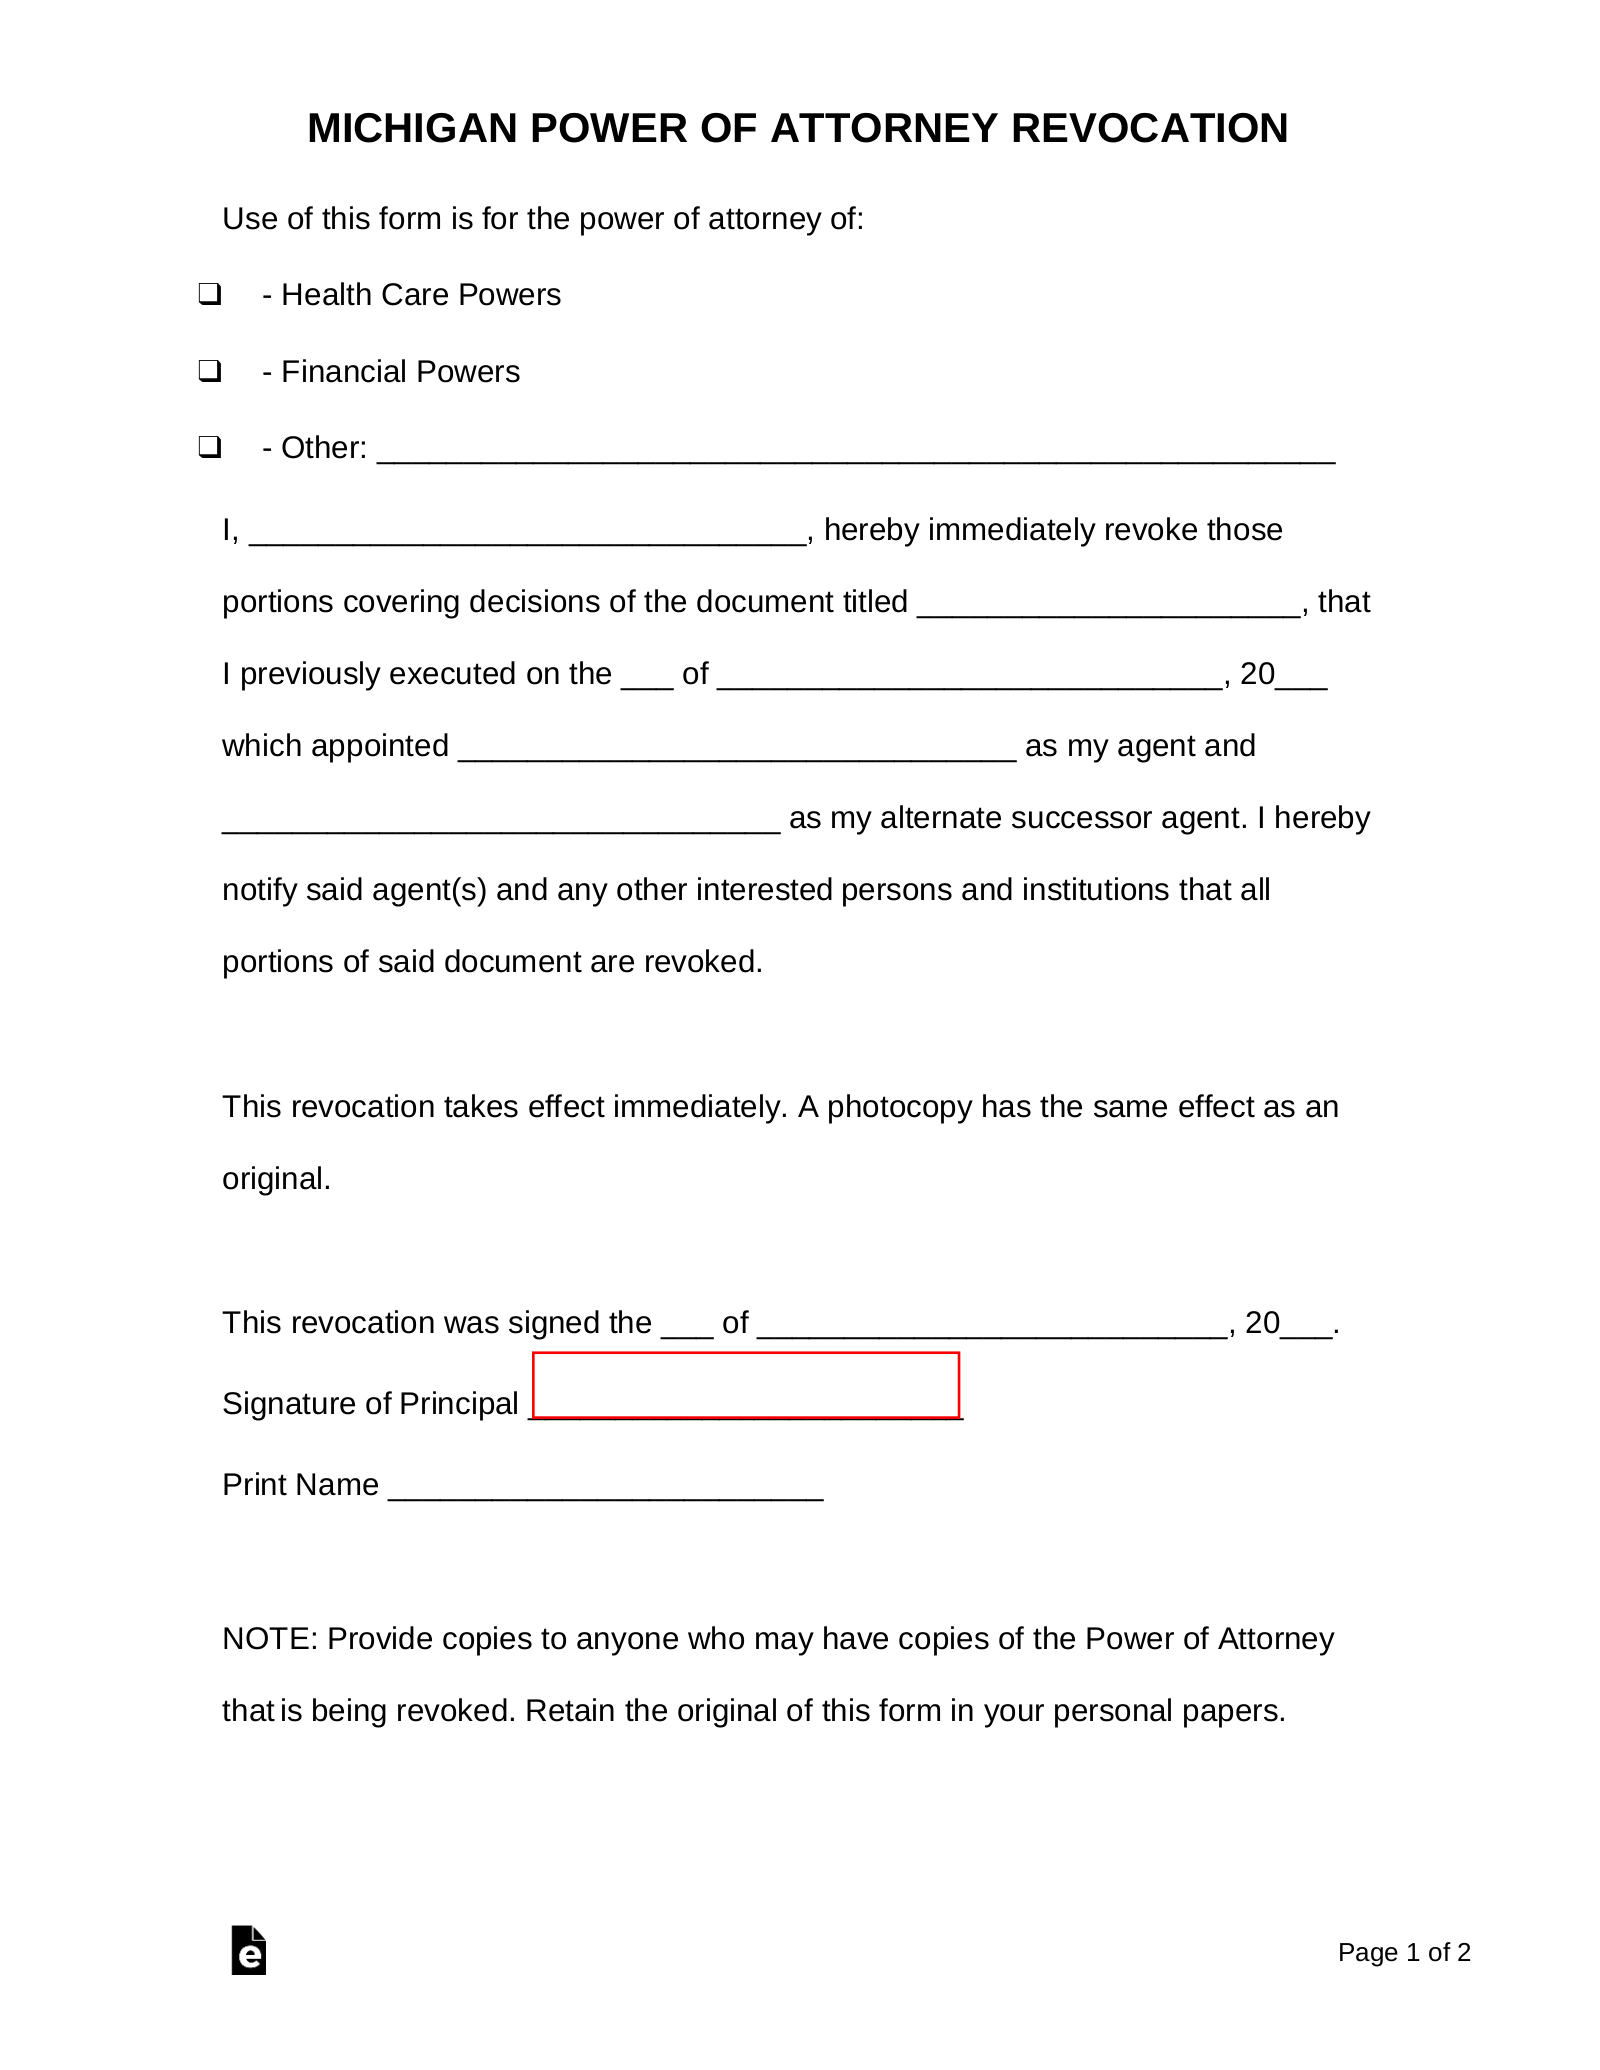 free-michigan-power-of-attorney-revocation-form-pdf-word-eforms